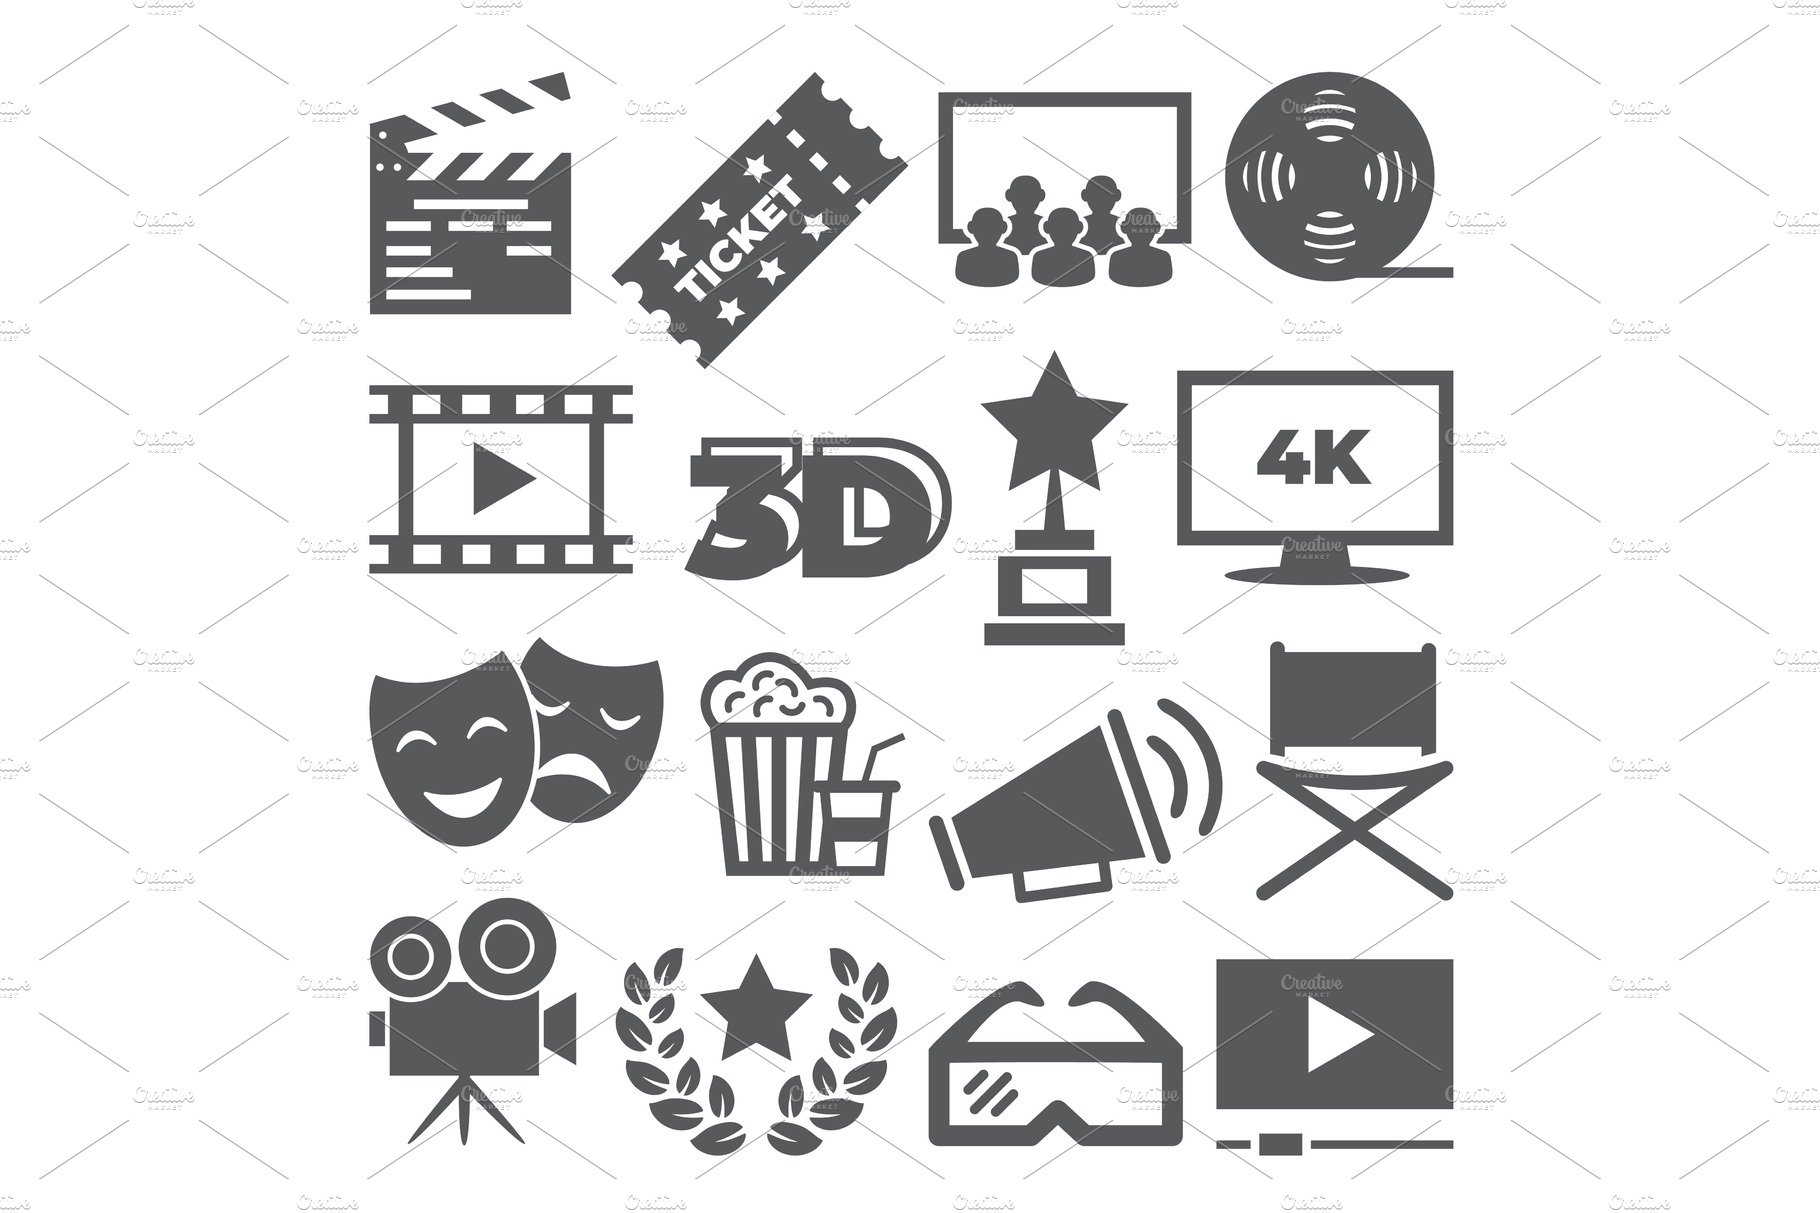 Cinema icons on white background cover image.